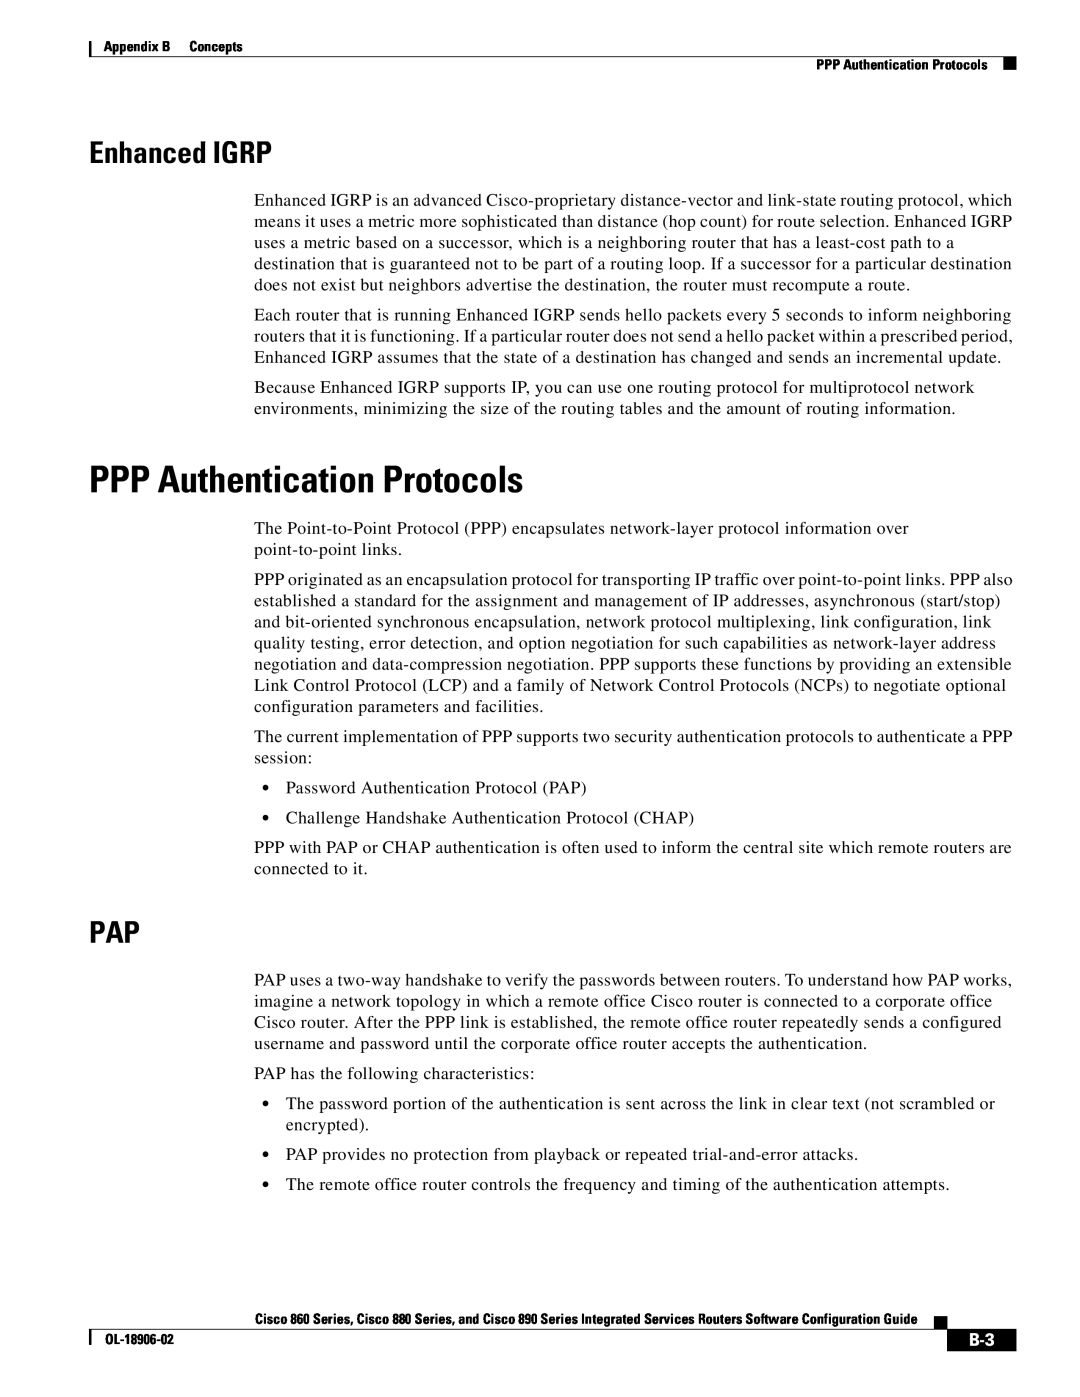 Cisco Systems C819HG4GVK9, C819GUK9 manual PPP Authentication Protocols, Enhanced IGRP 